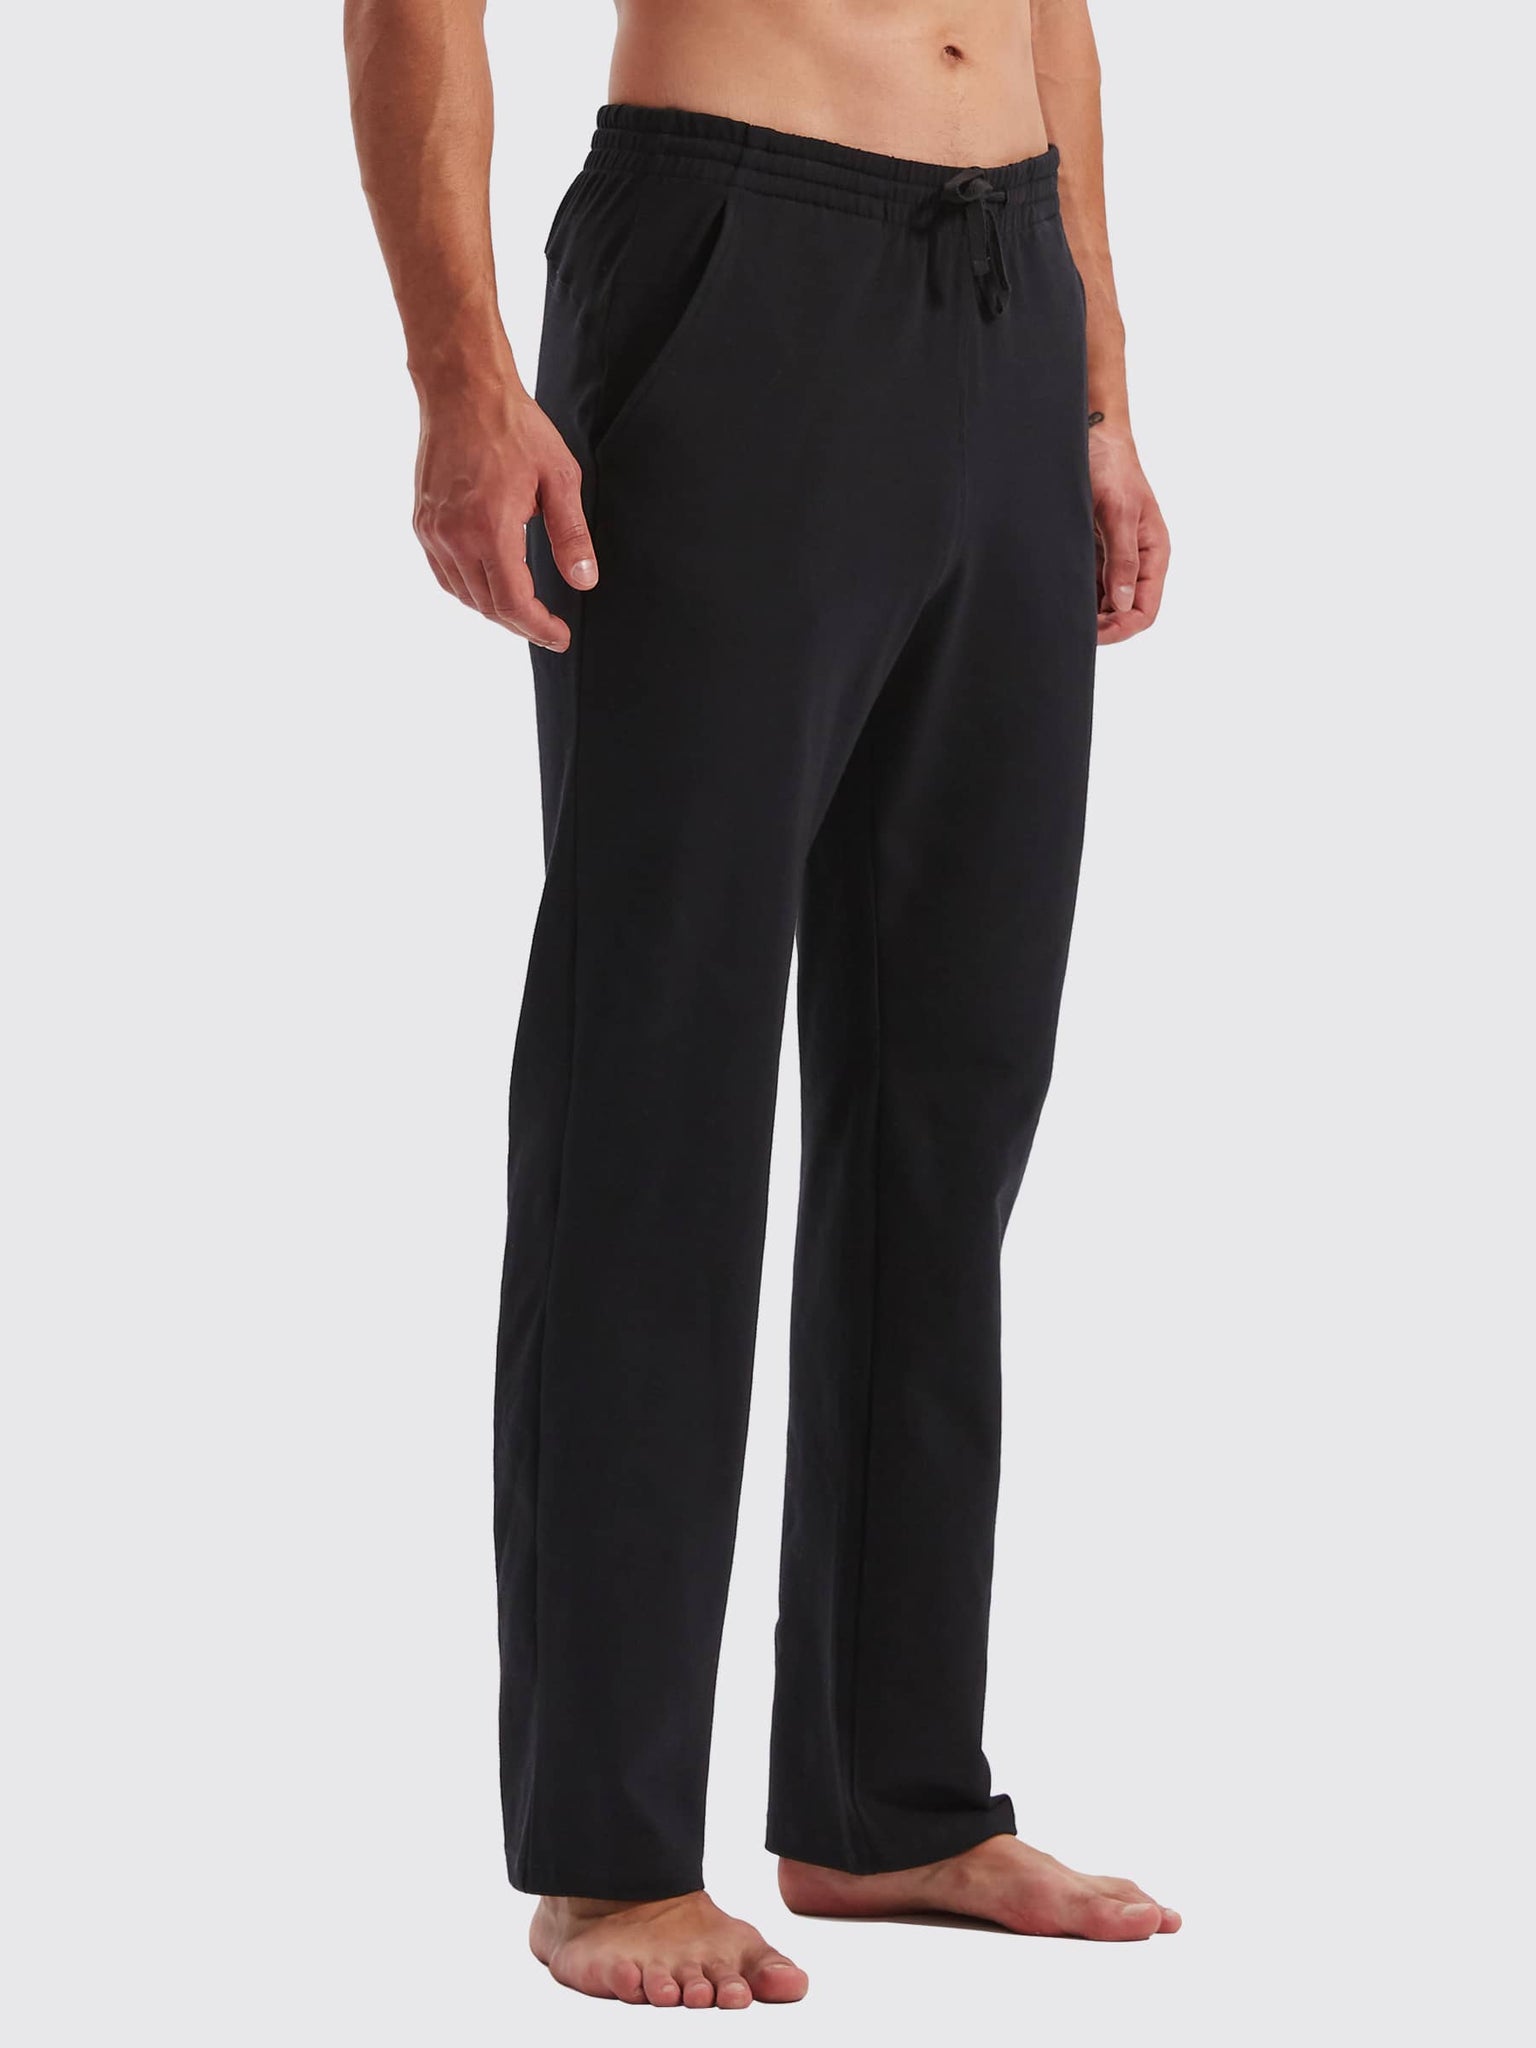 Men's Cotton Yoga Balance Sweatpants_Black_model3